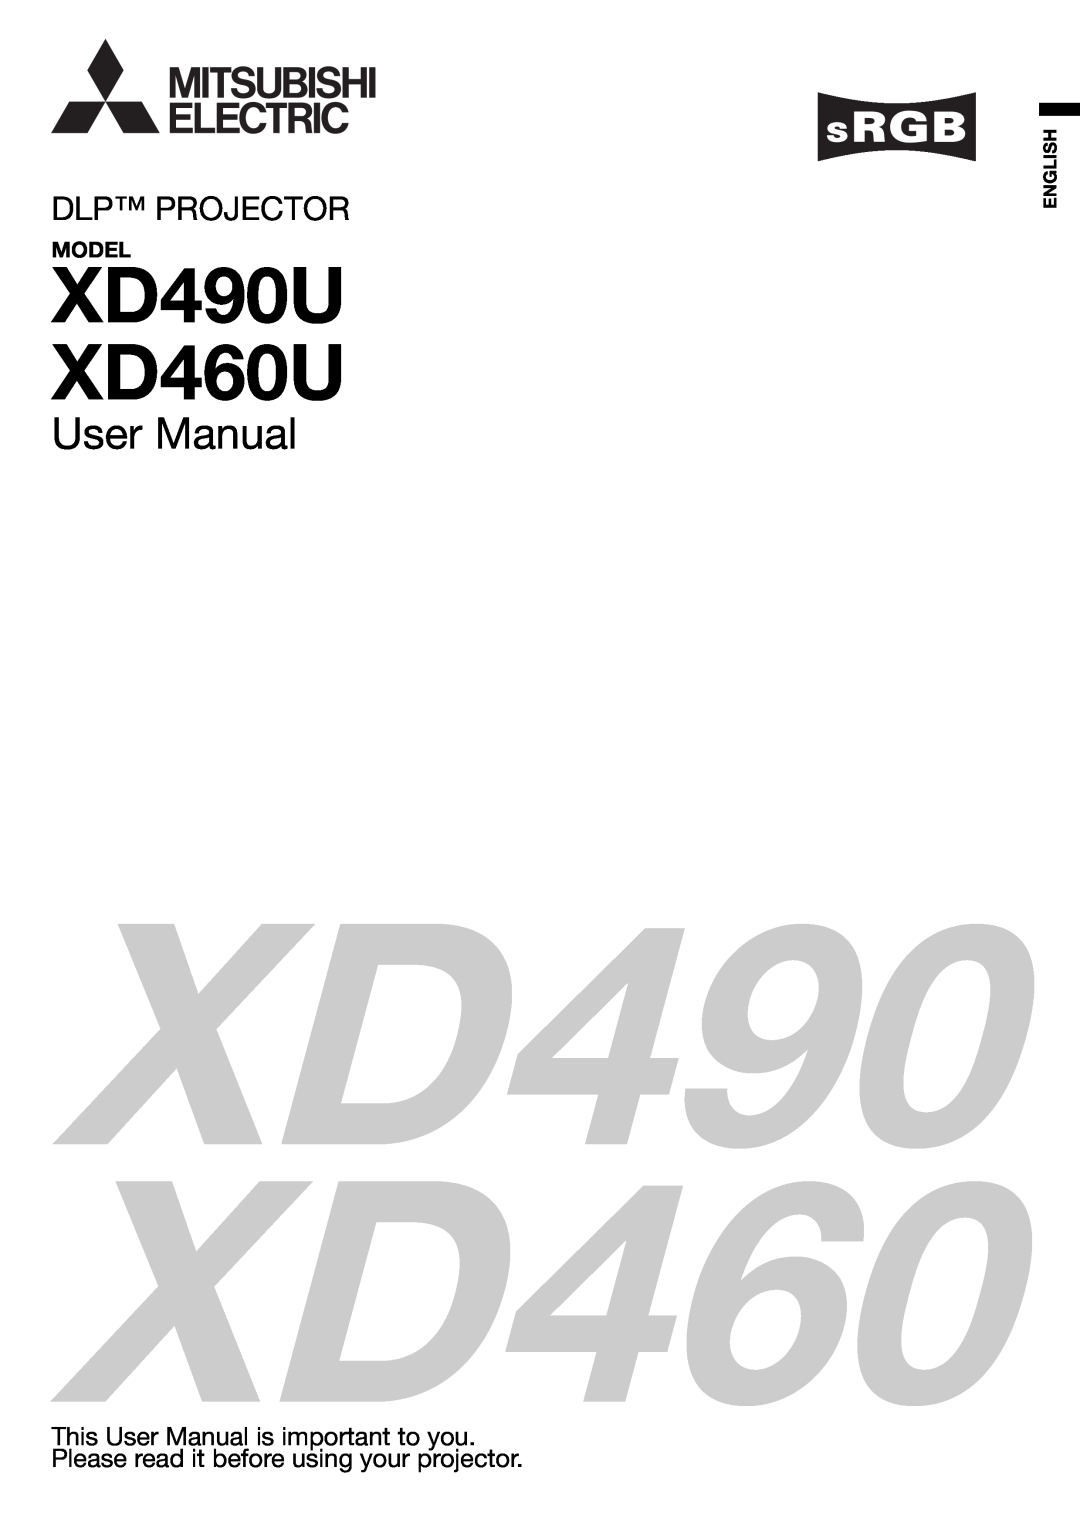 Mitsubishi Electronics user manual XD490 XD460, XD490U XD460U, User Manual, Dlp Projector, English 